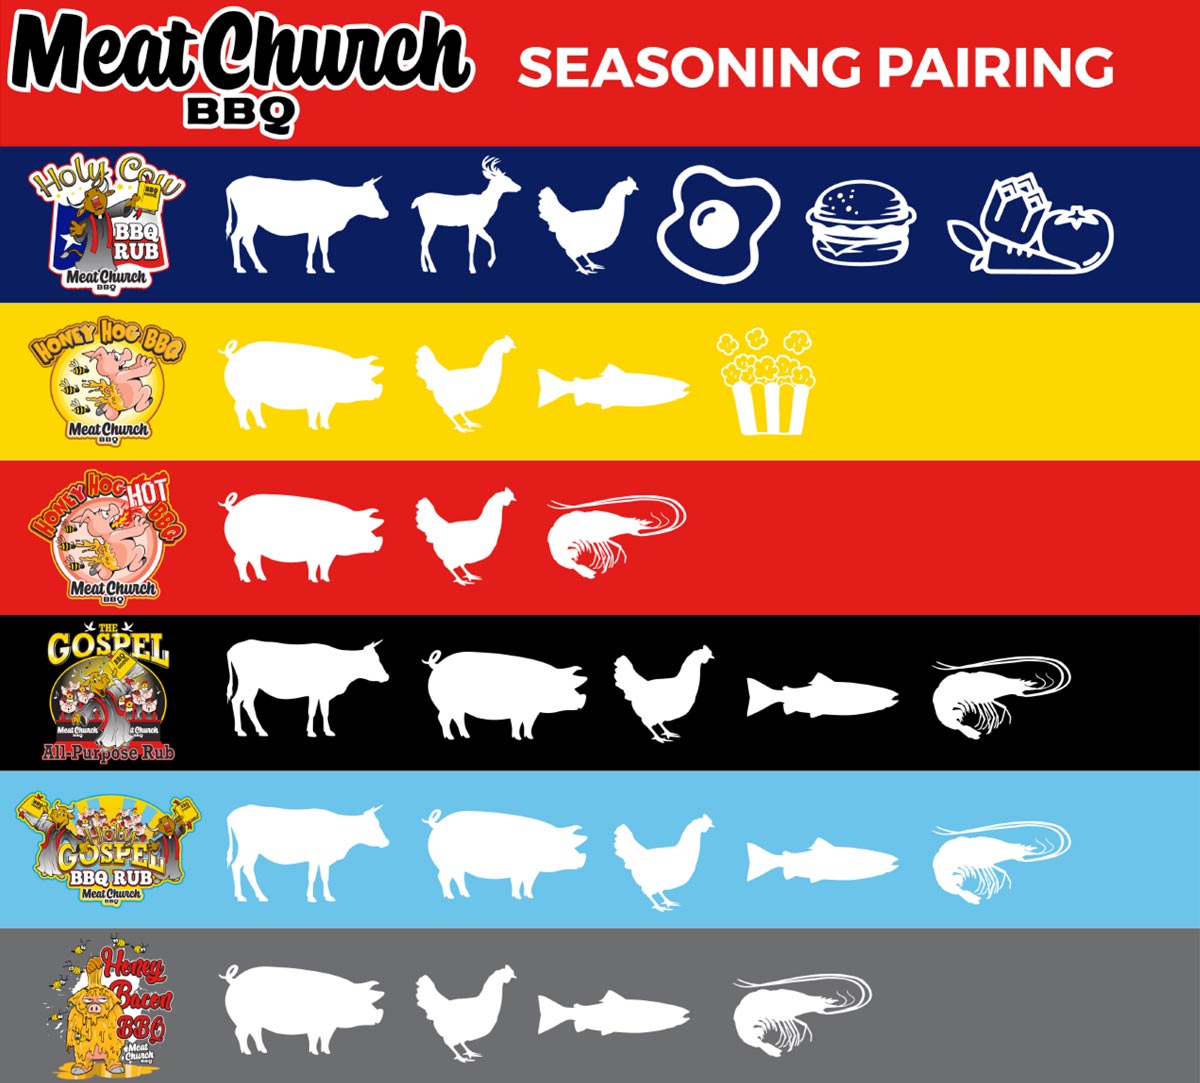 Meat Church BBQ Seasoning Pairing Guide